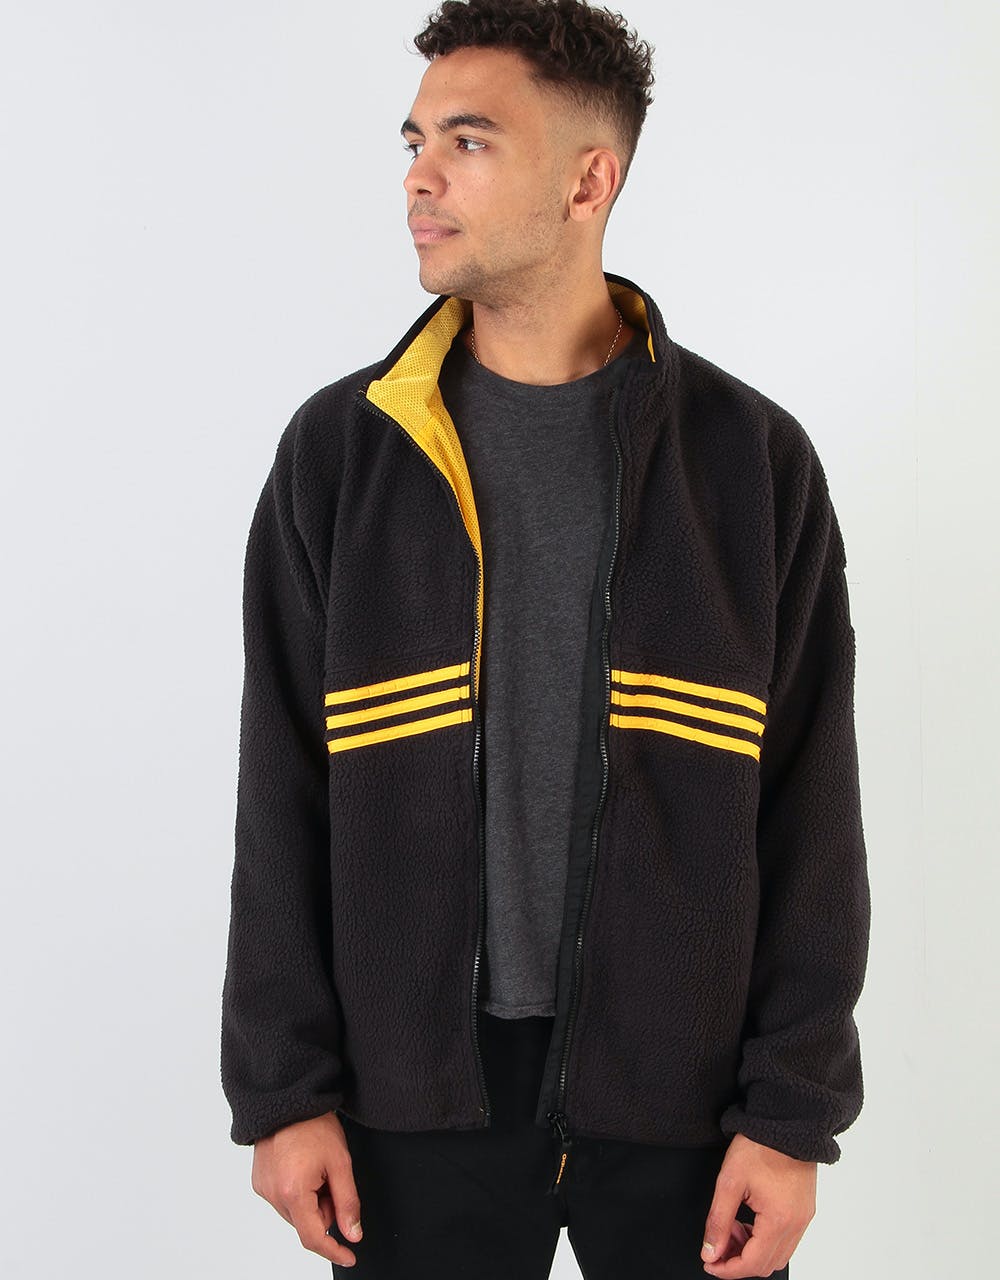 Adidas Sherpa Full Zip Fleece Jacket - Black/Active Gold